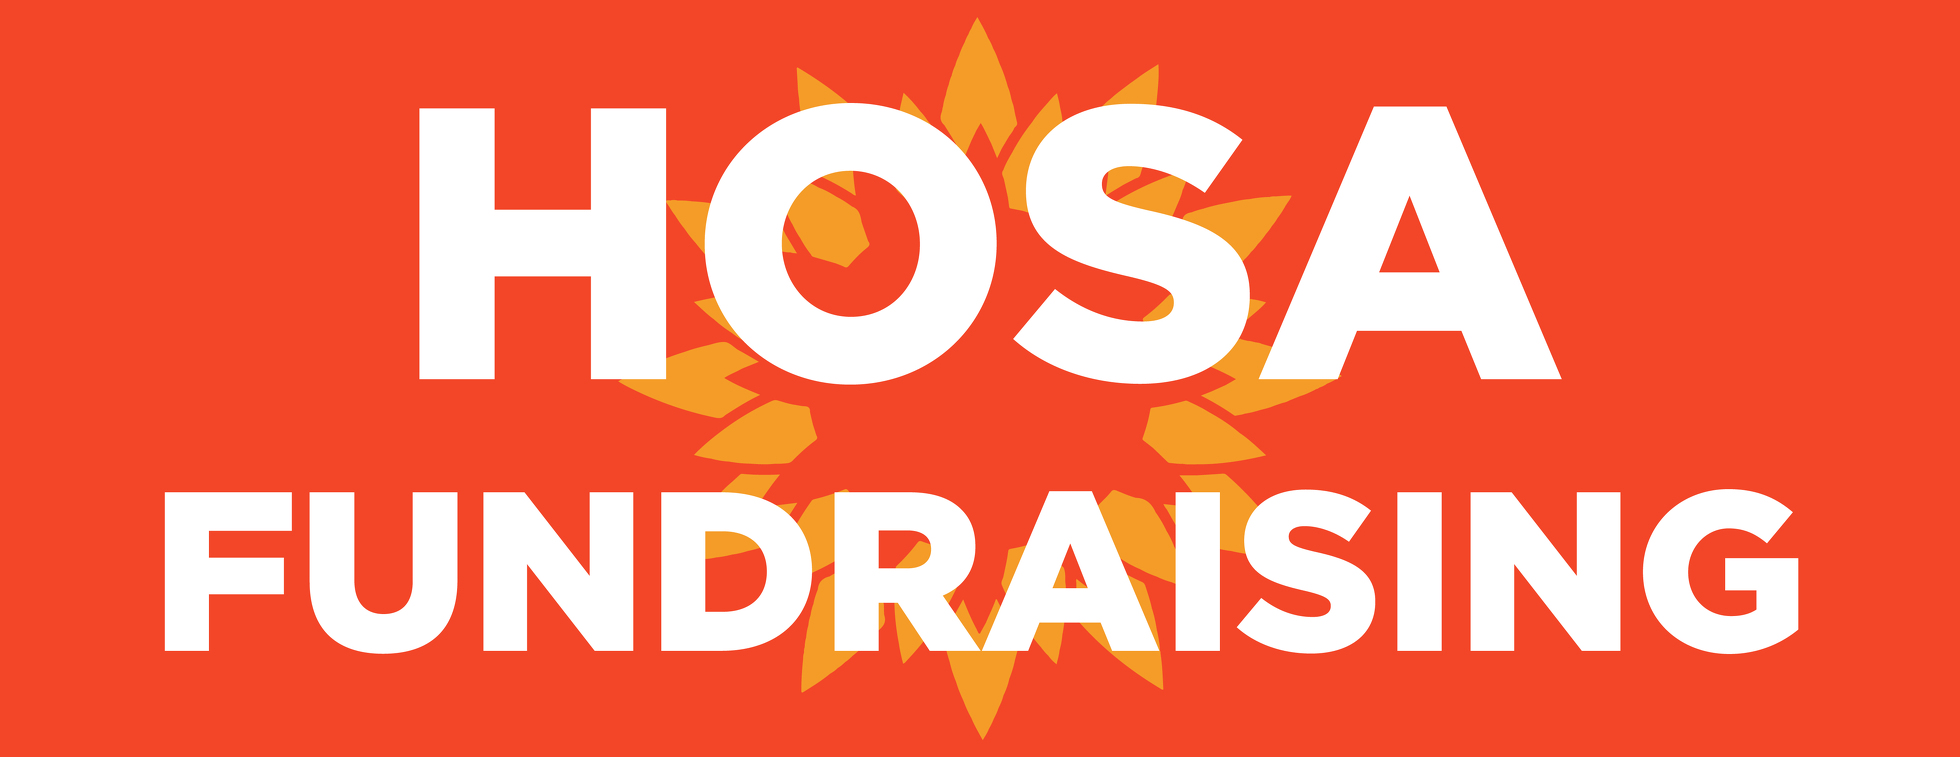 HOSA Fundraising 2020